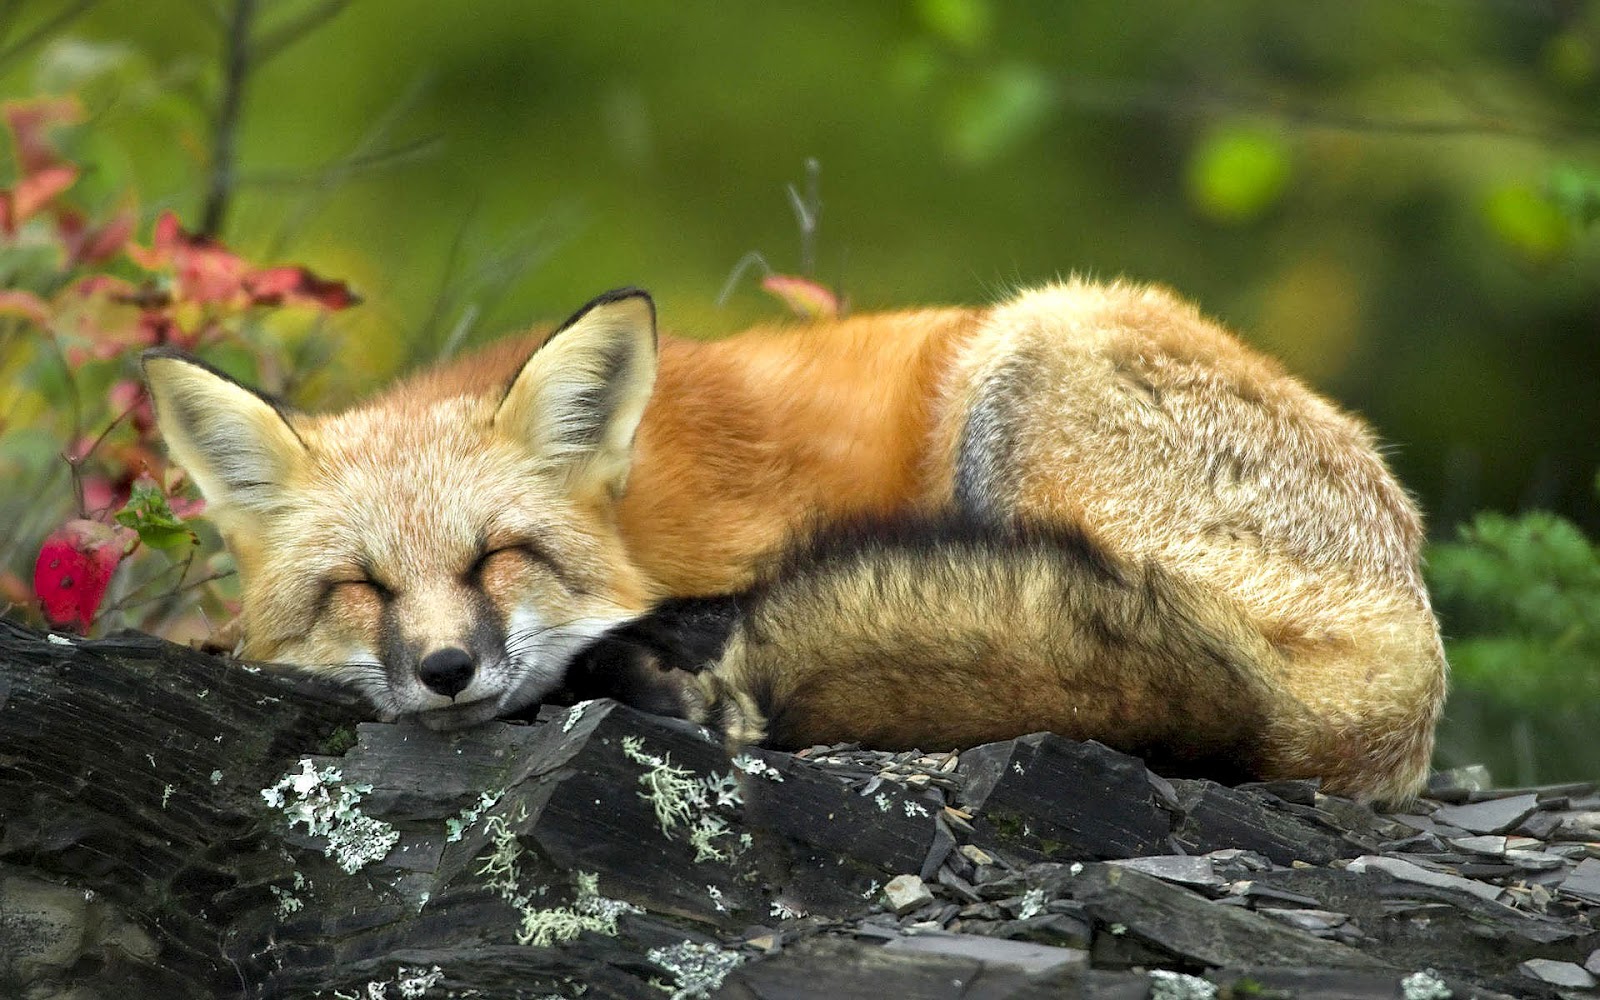 HD Animal Wallpaper Of A Sleeping Fox